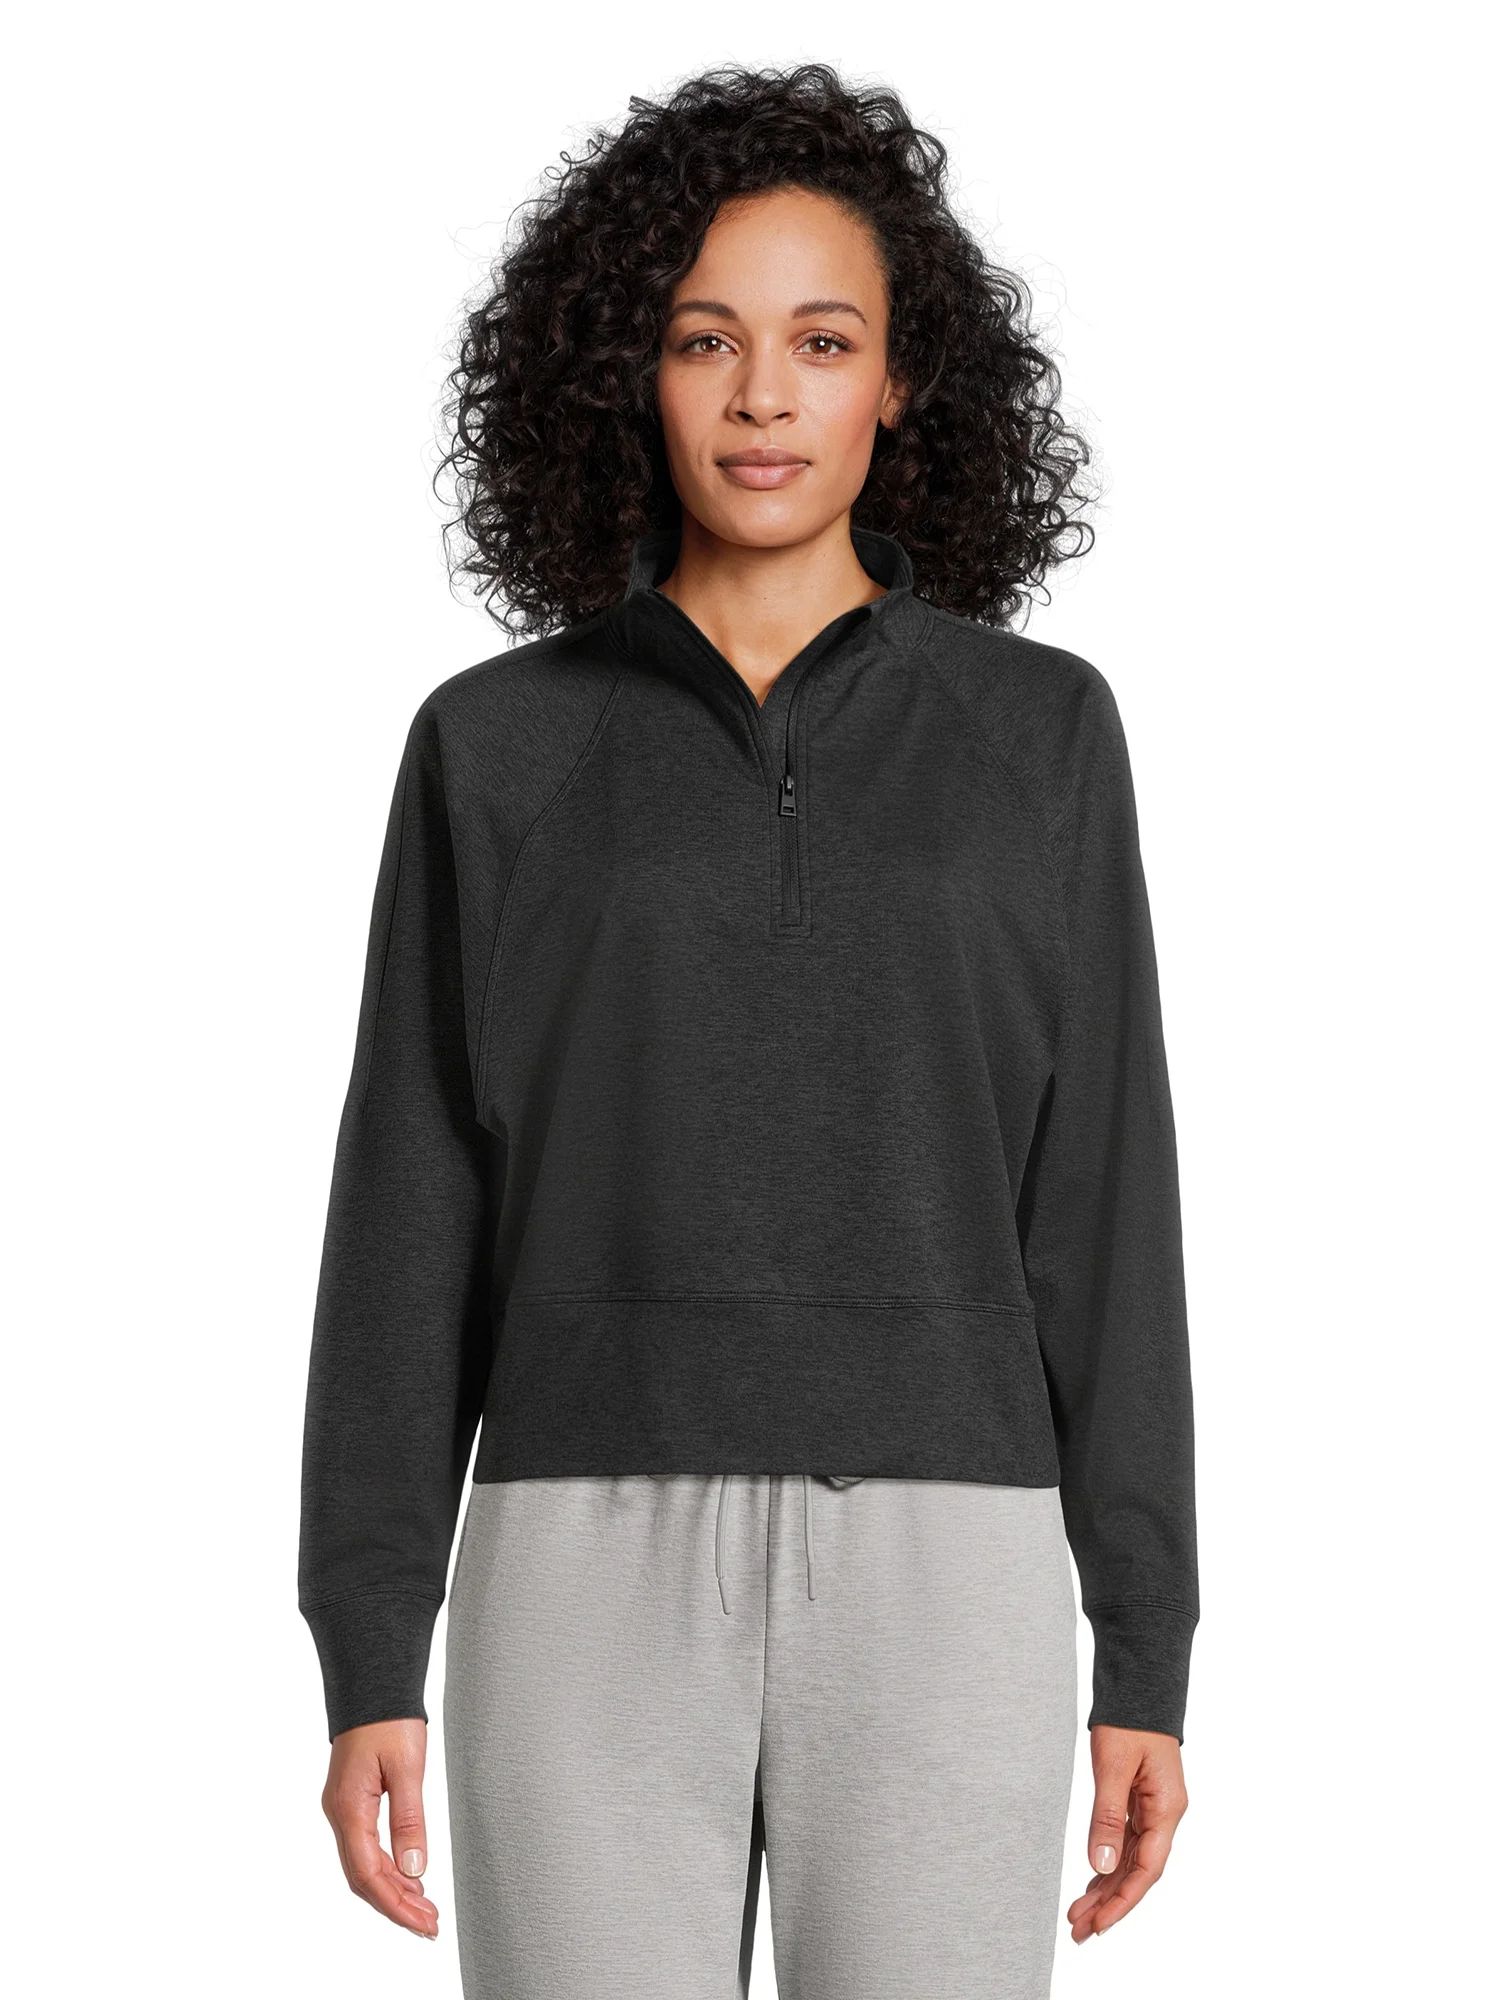 Athletic Works Women’s ButterCore Long Sleeve Mock Neck Quarter Zip Pullover Top, Sizes XS-XXXL | Walmart (US)